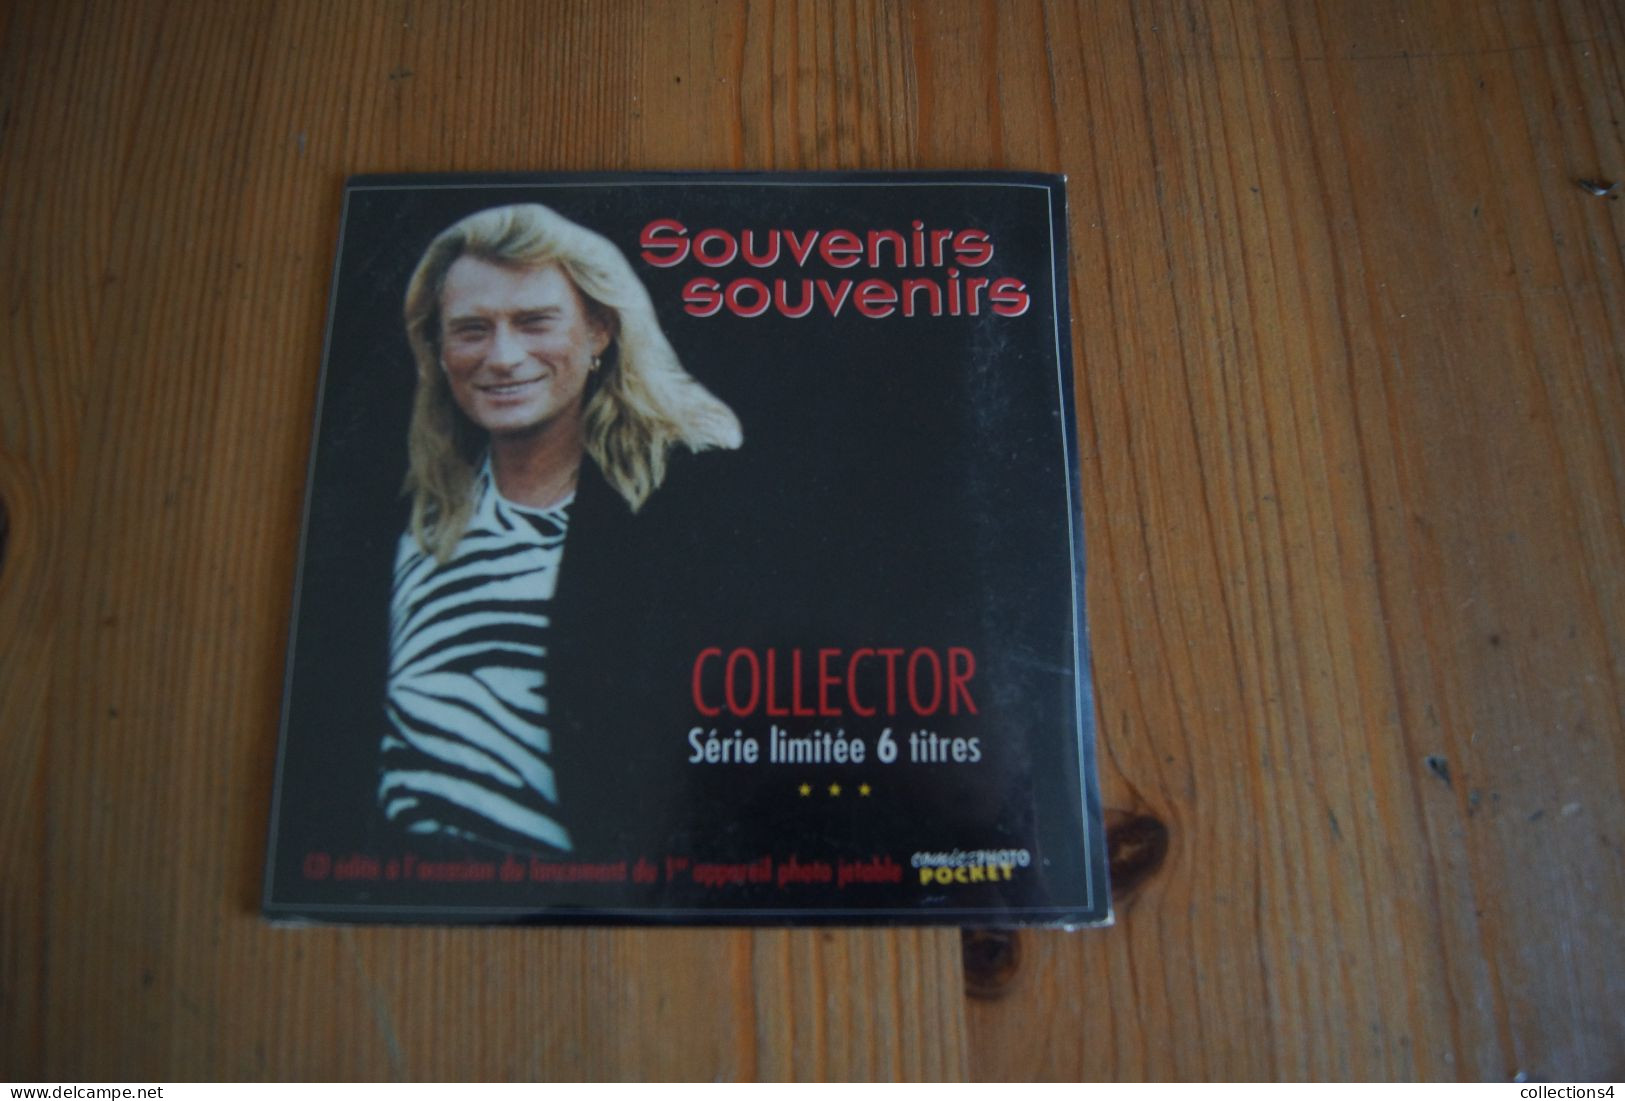 JOHNNY HALLYDAY SOUVENIRS SOUVENIRS SERIE LIMITEE 6 TITRES CD NEUF SCELLE  1995 PROMO - Rock